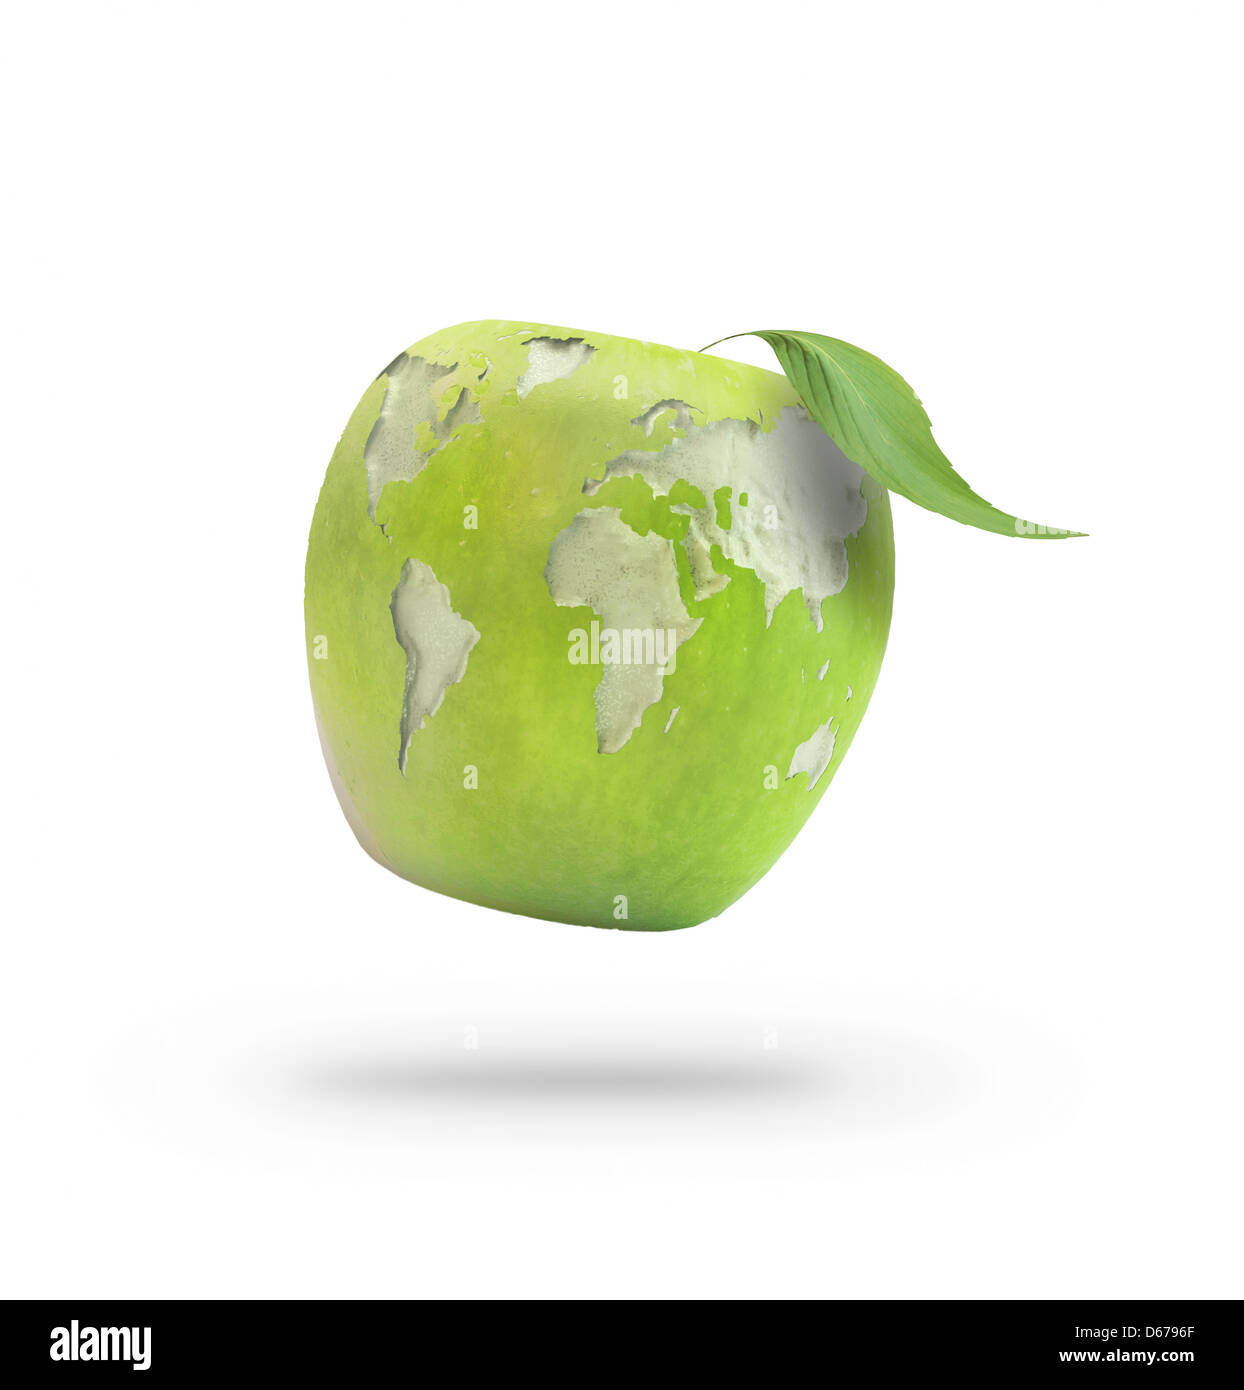 Geschälten Apfel bildet die Weltkarte Stockfoto